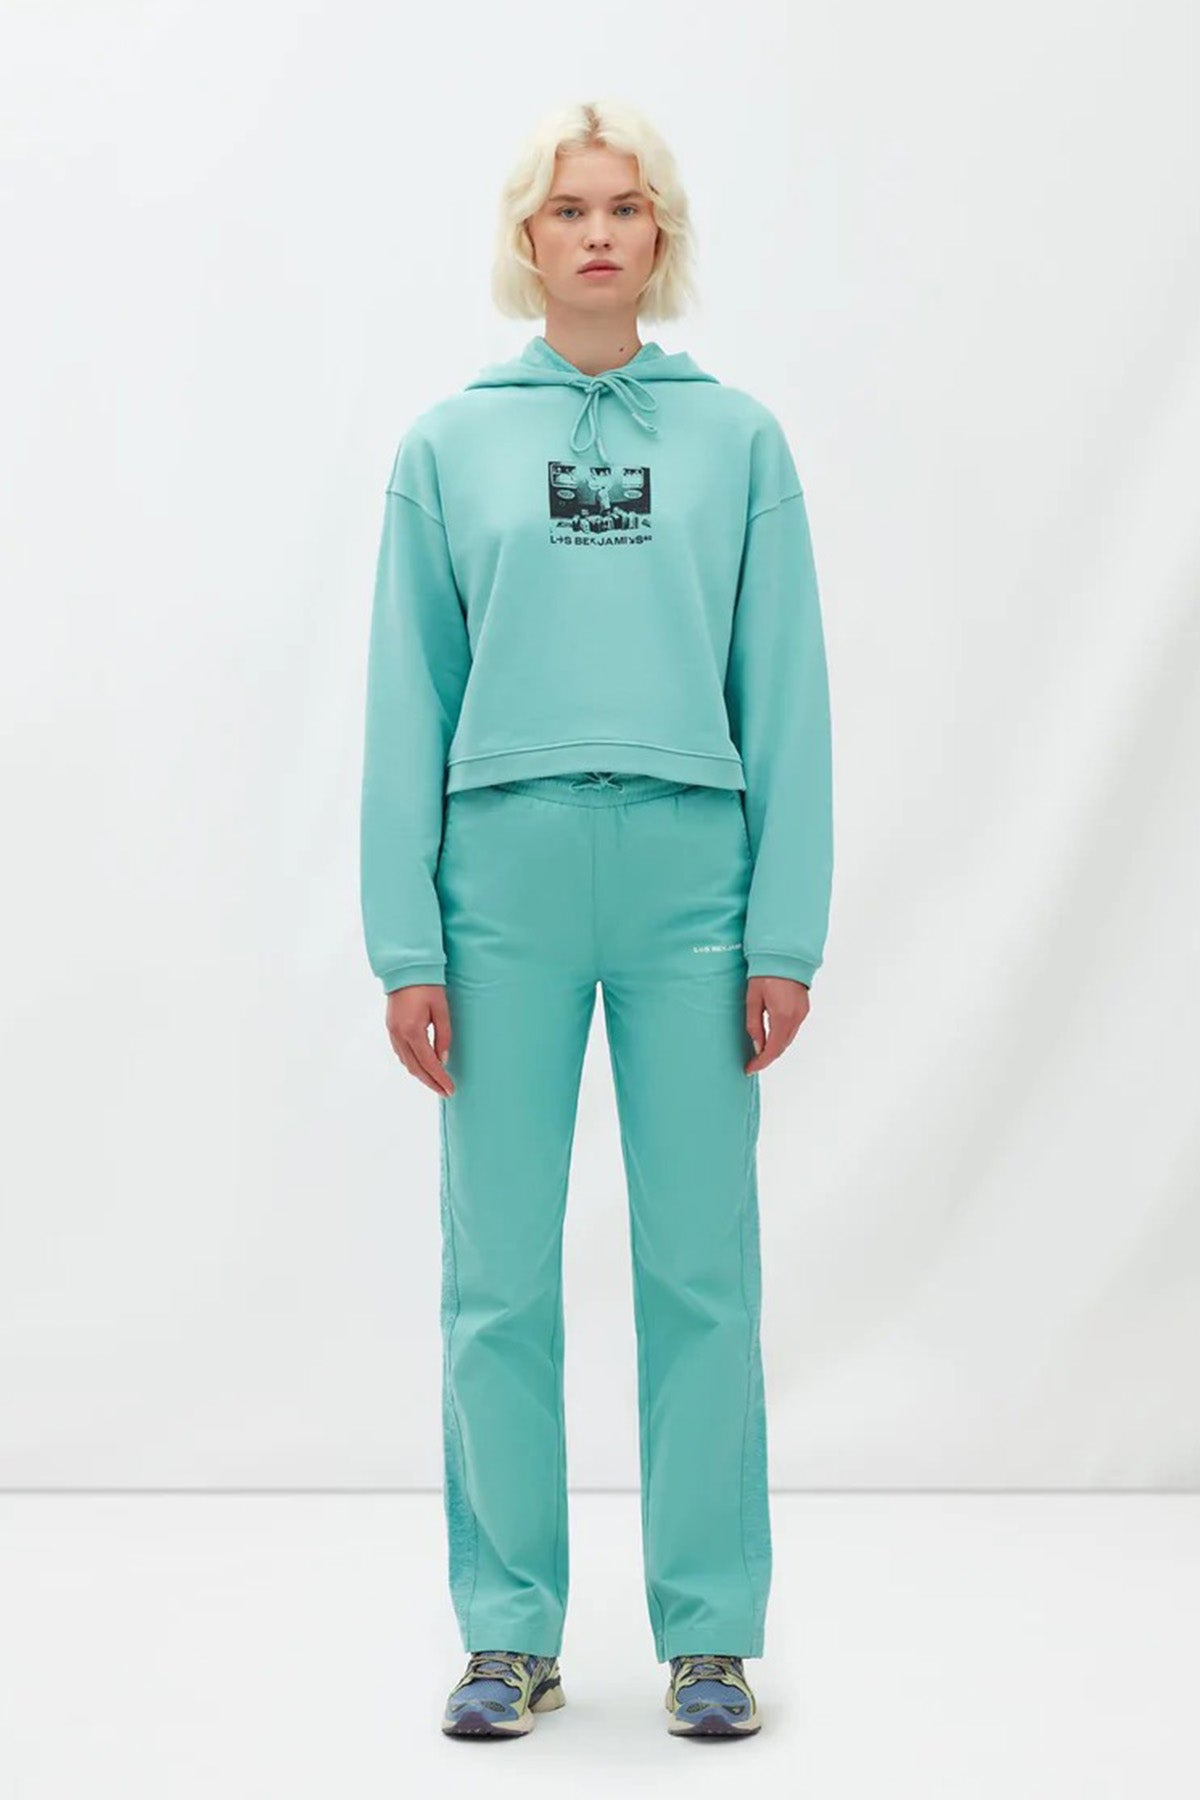 Les Benjamins Logolu Kapüşonlu Crop Sweatshirt-Libas Trendy Fashion Store